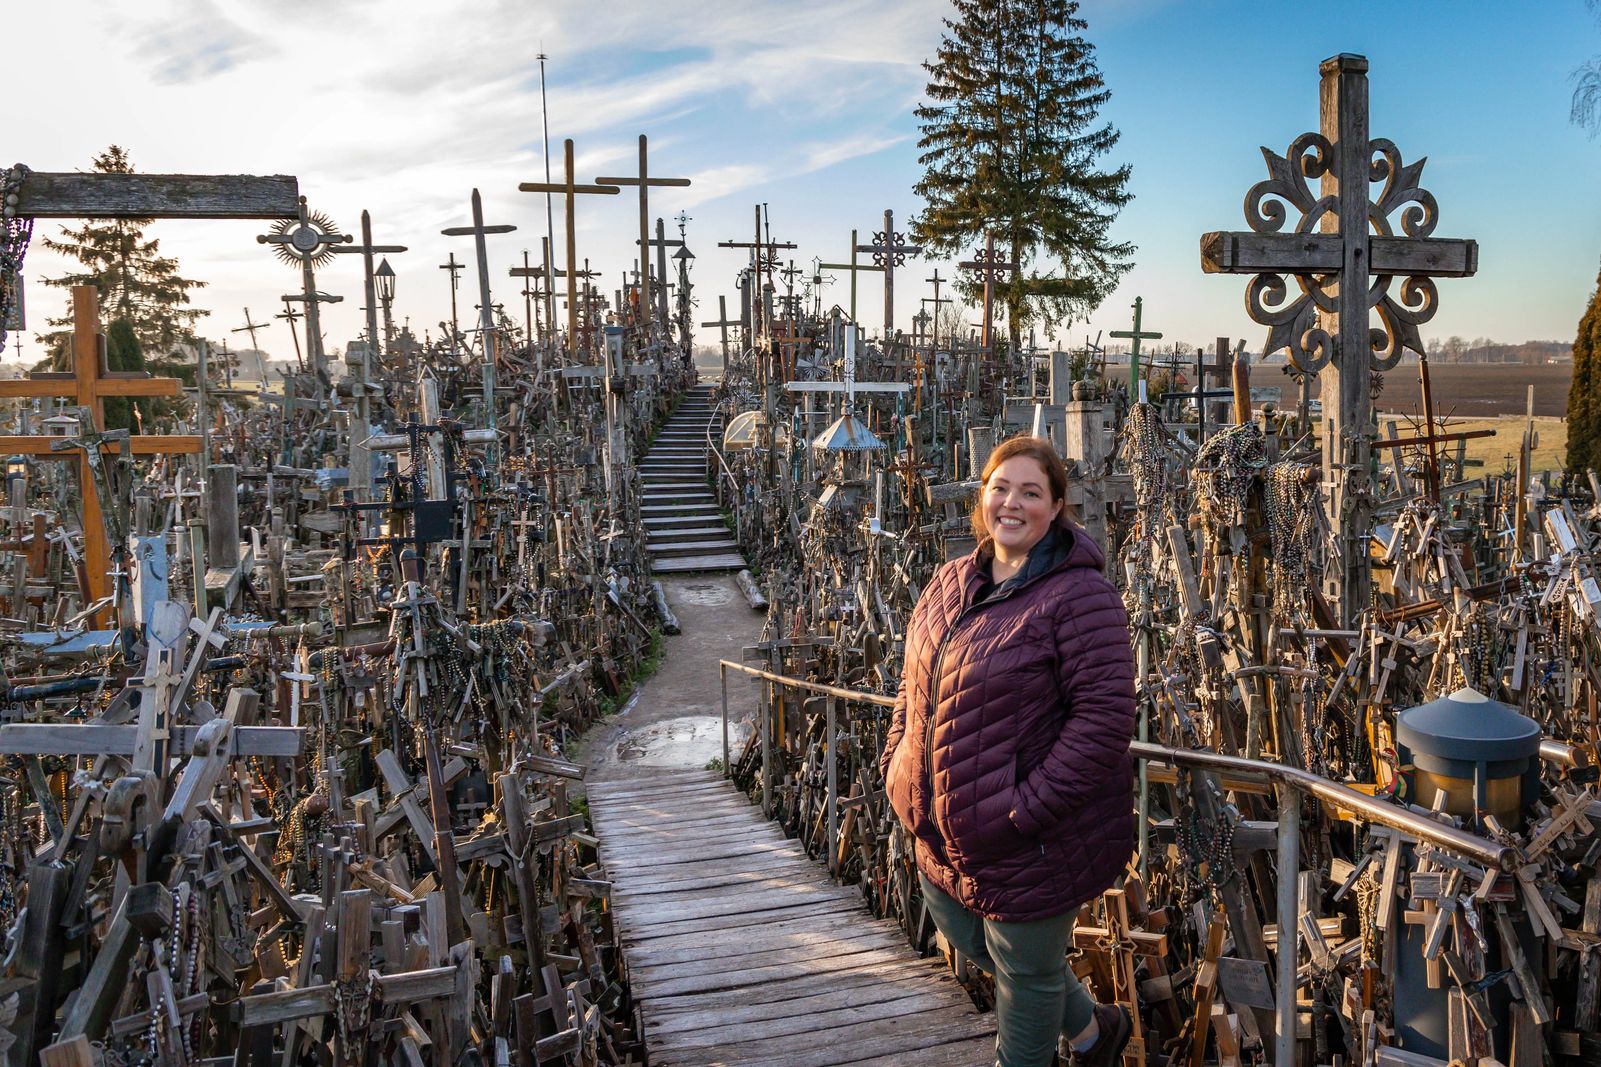 Janiel Standing on wooden walkway among thousands of wooden crosses